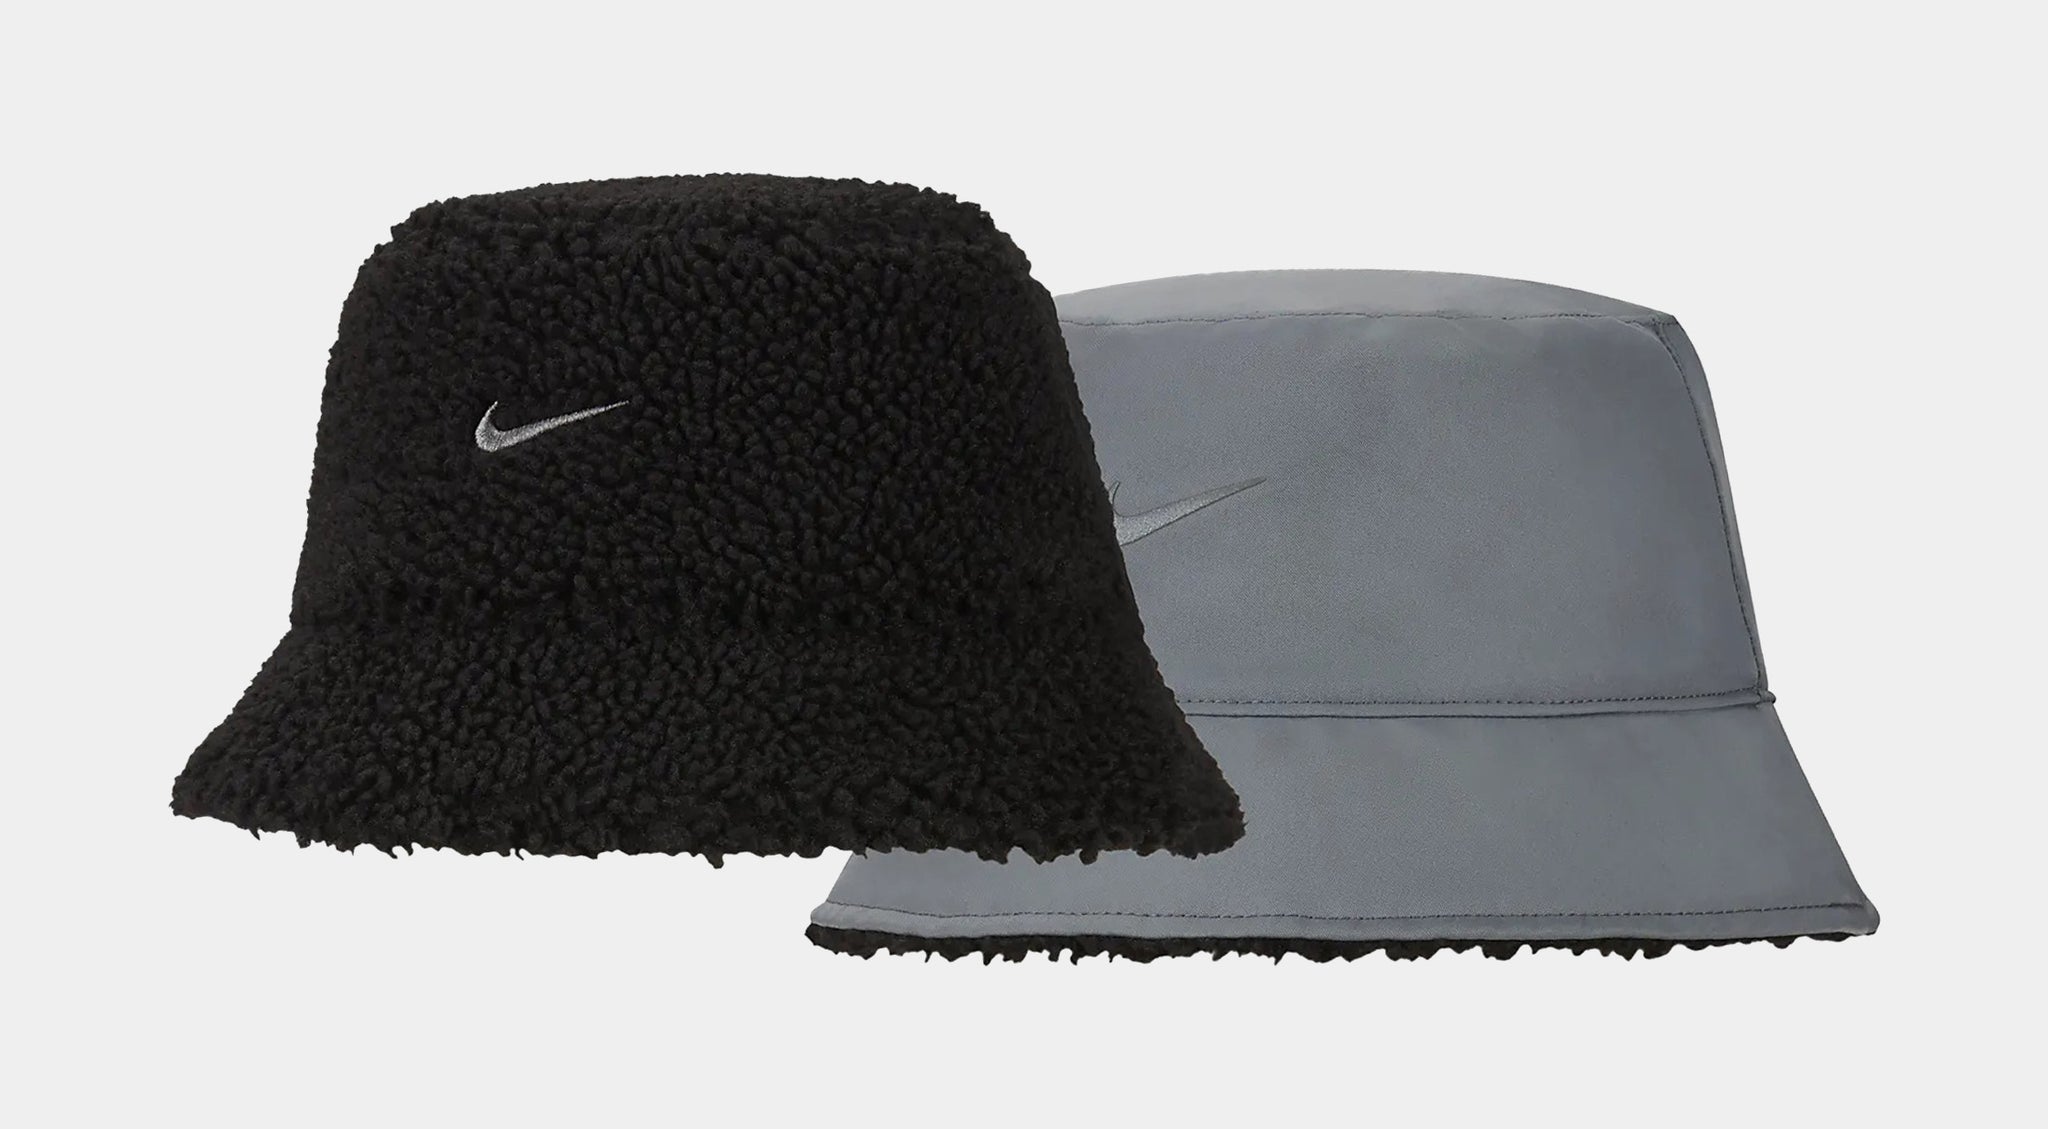 Nike Men's Hat - Black